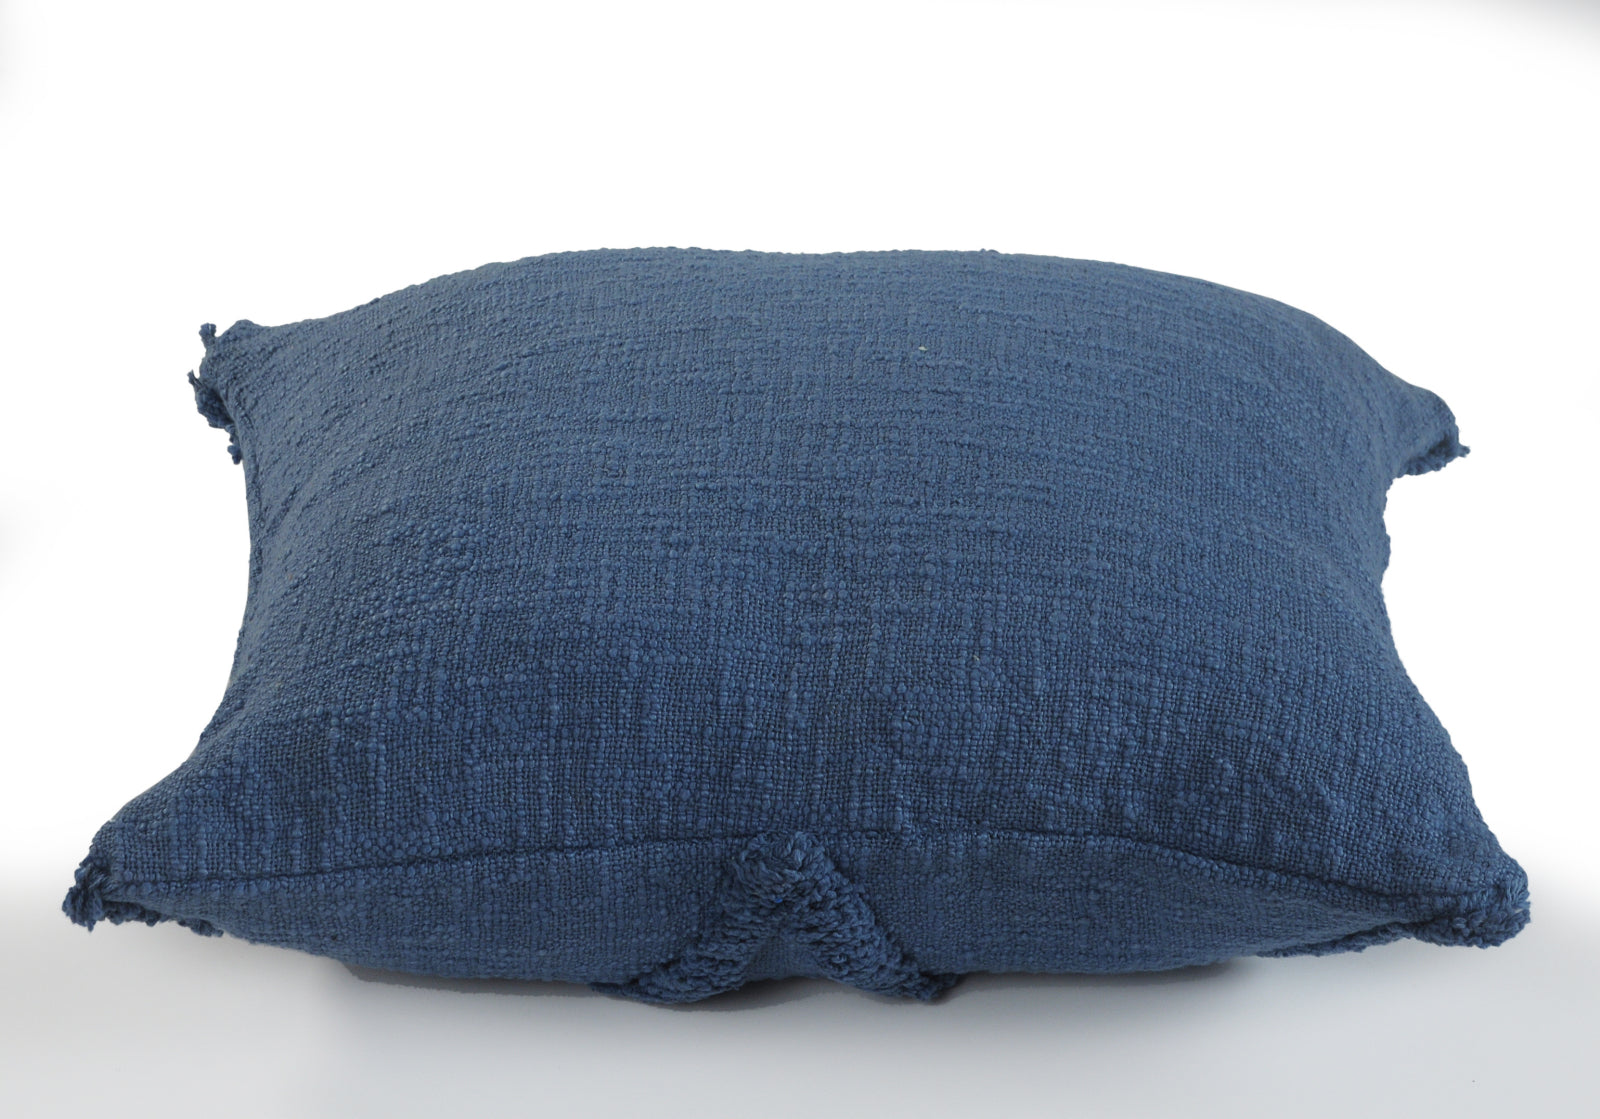 LR Resources Pillows 07390 Coronet blue main image